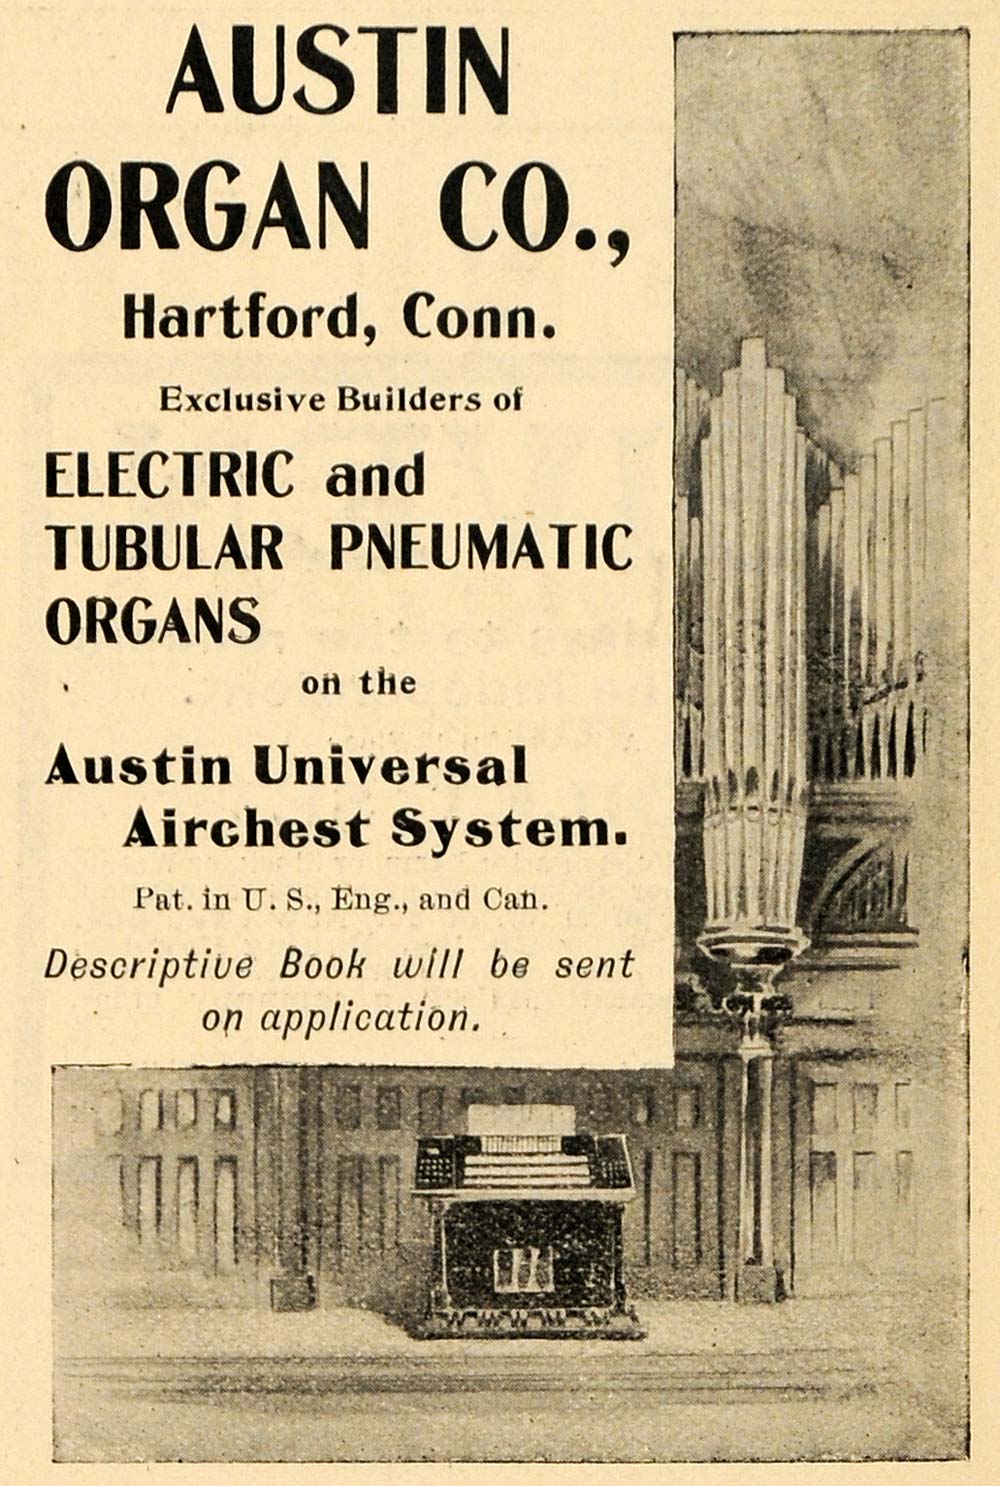 1903 Ad Austin Organ Co. Electric Tubular Instruments - ORIGINAL TIN5